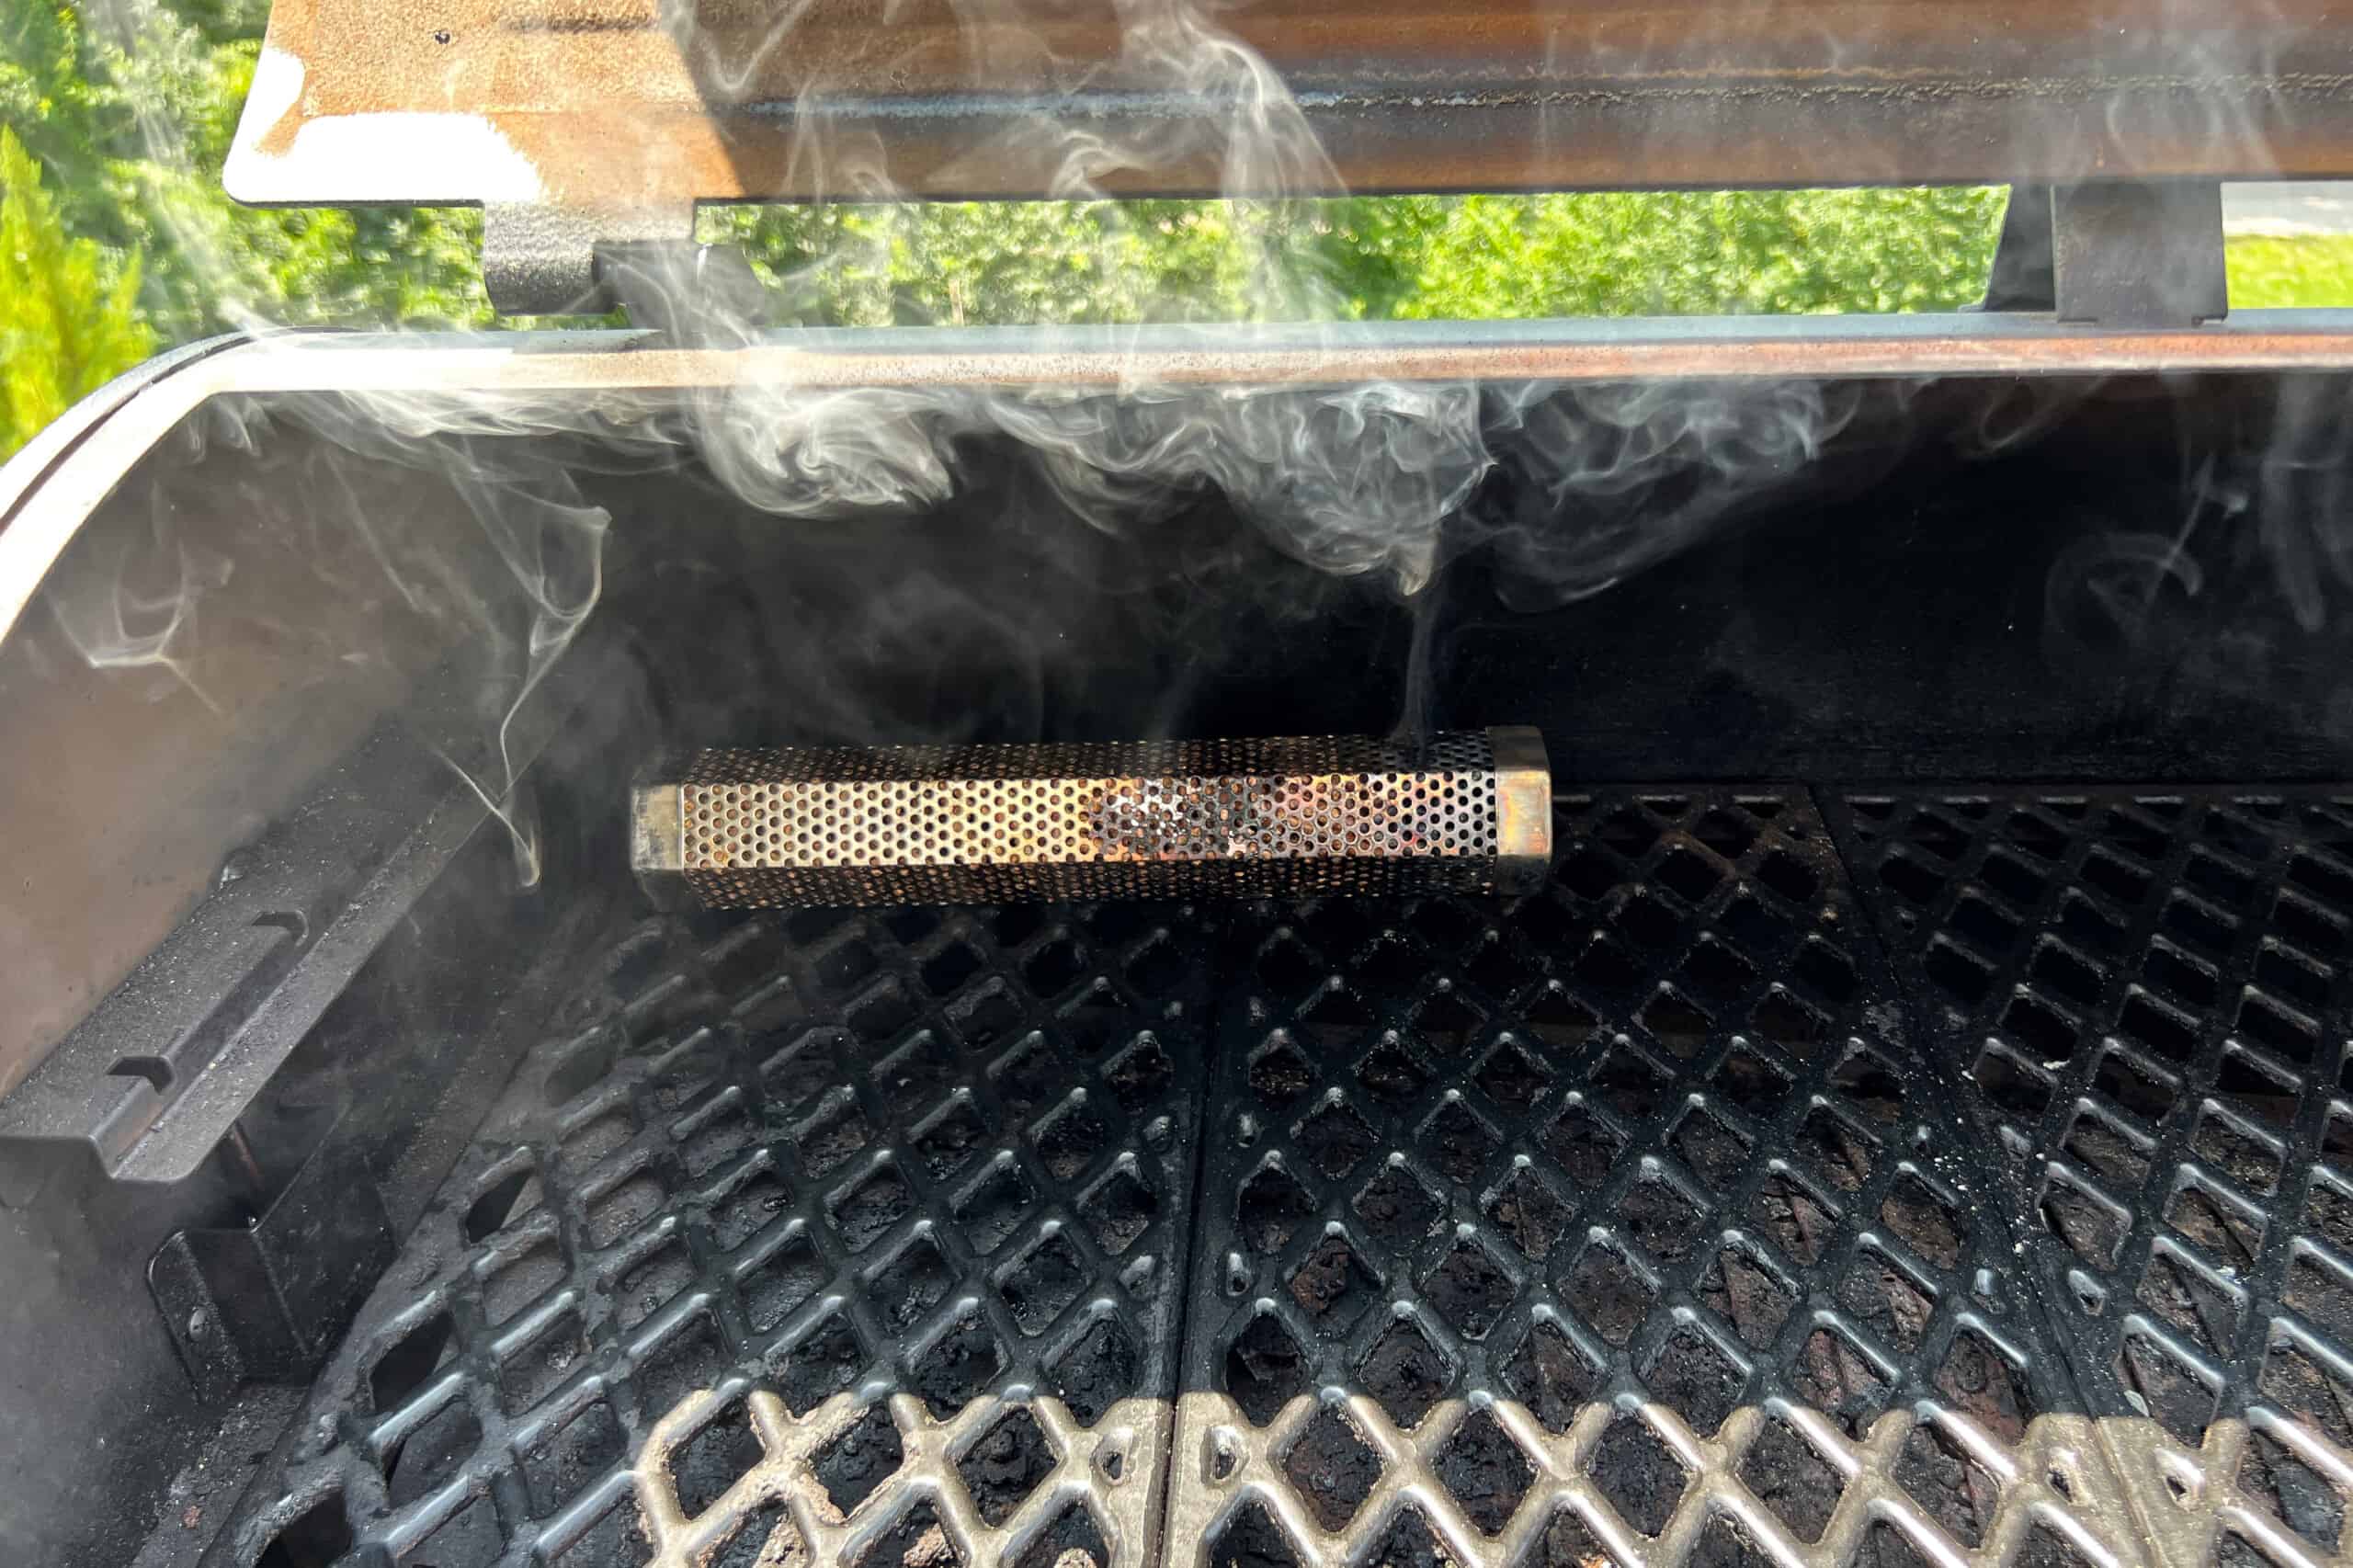 a lit pellet tube smoker near the back left of the pellet grill